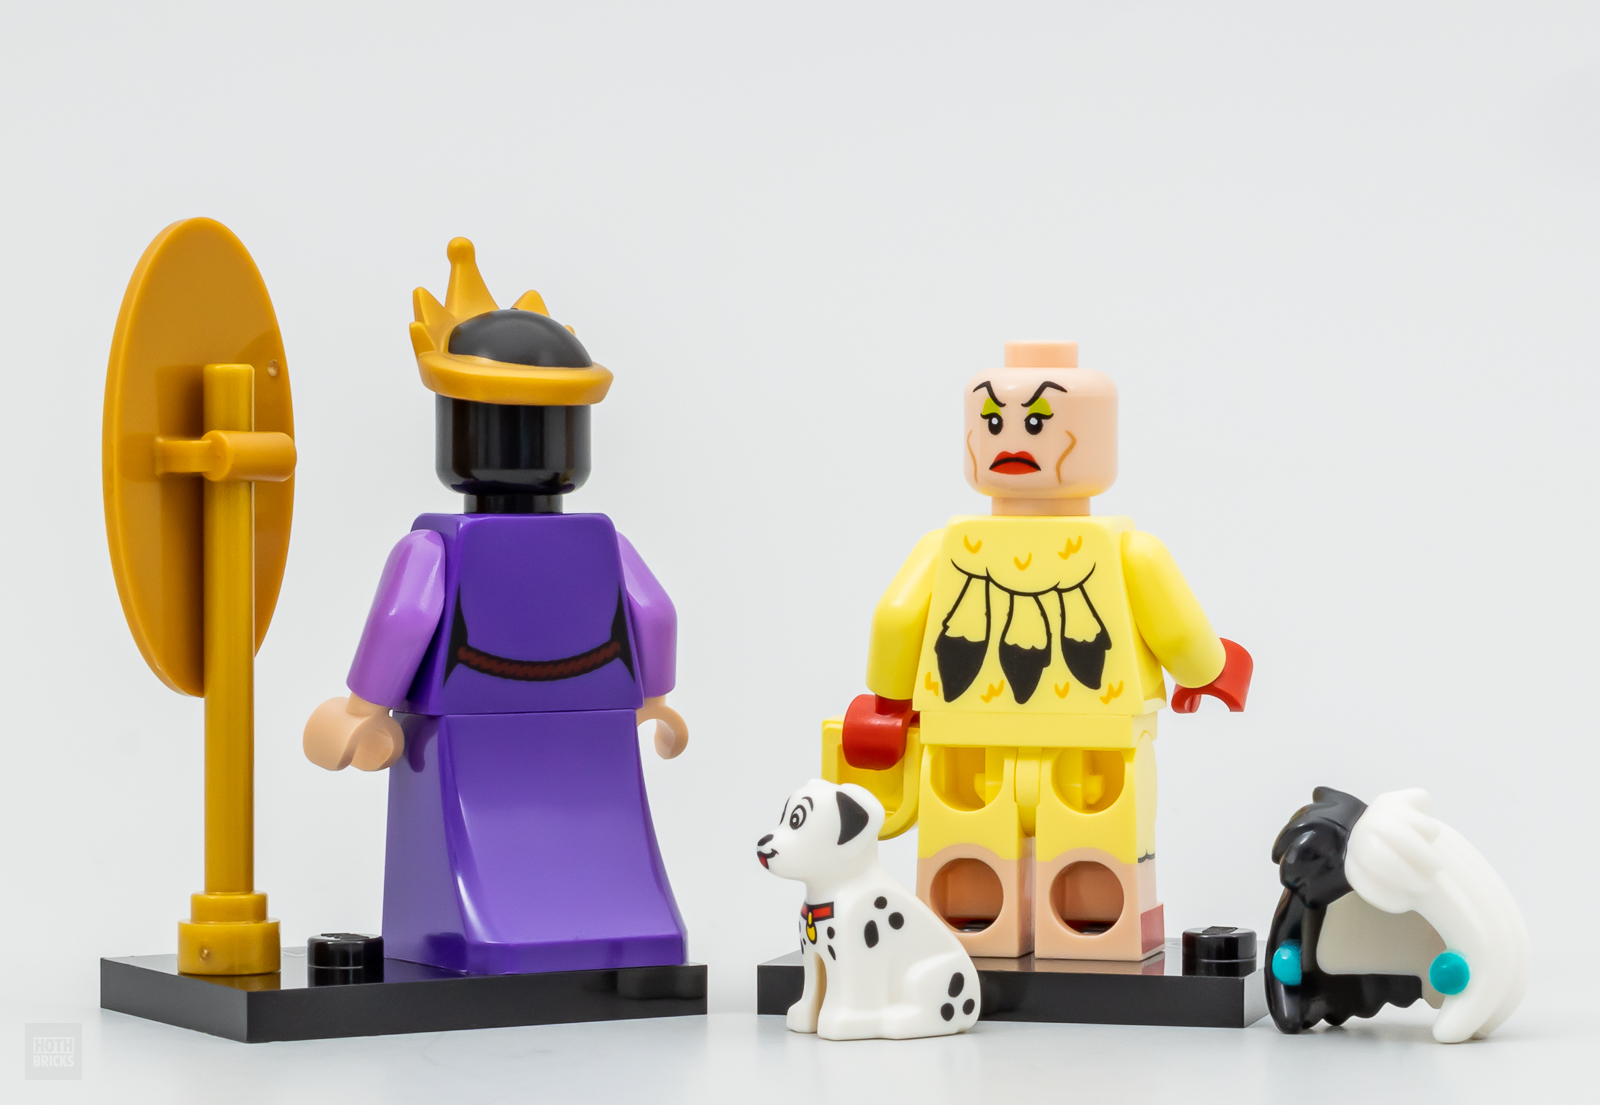 Brickfinder - LEGO 100 Years of Disney Minifigures 71038 Character